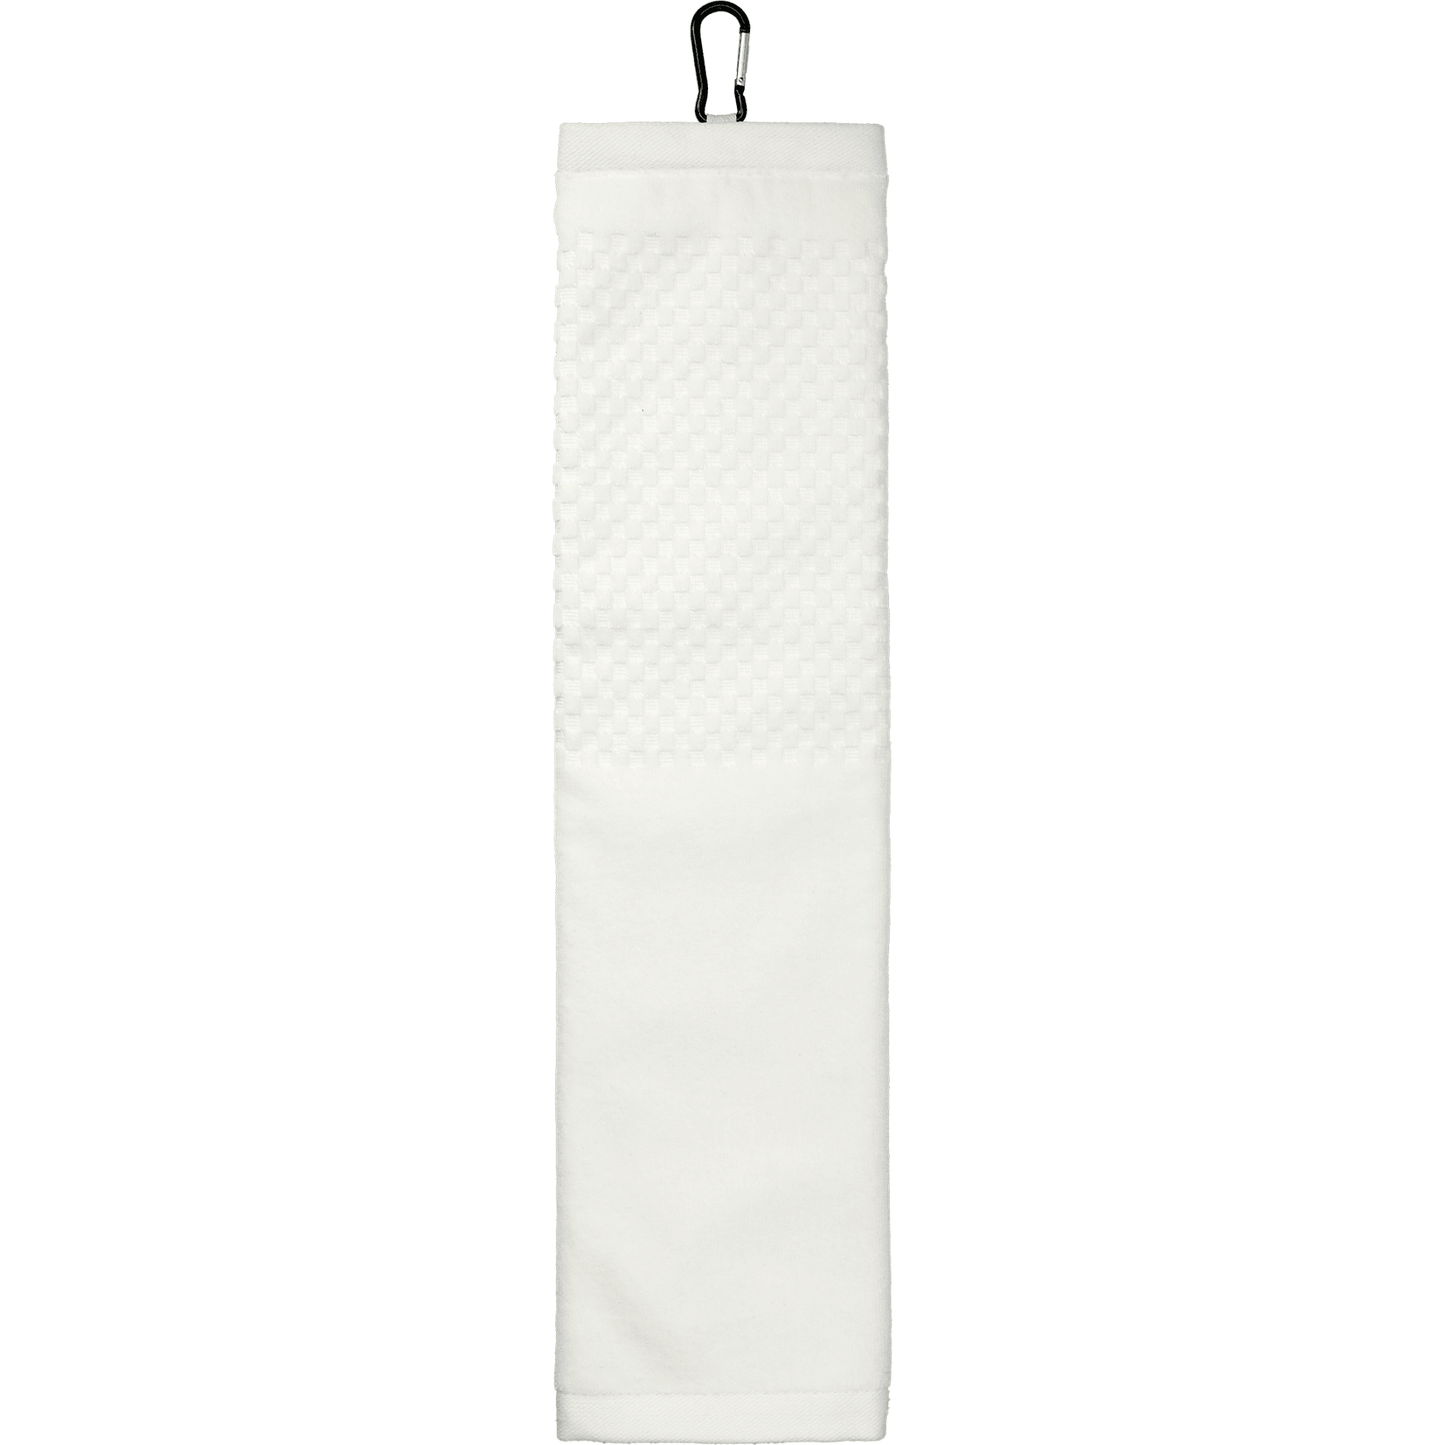 5.25 x 22 inch Scrubber Golf Towel